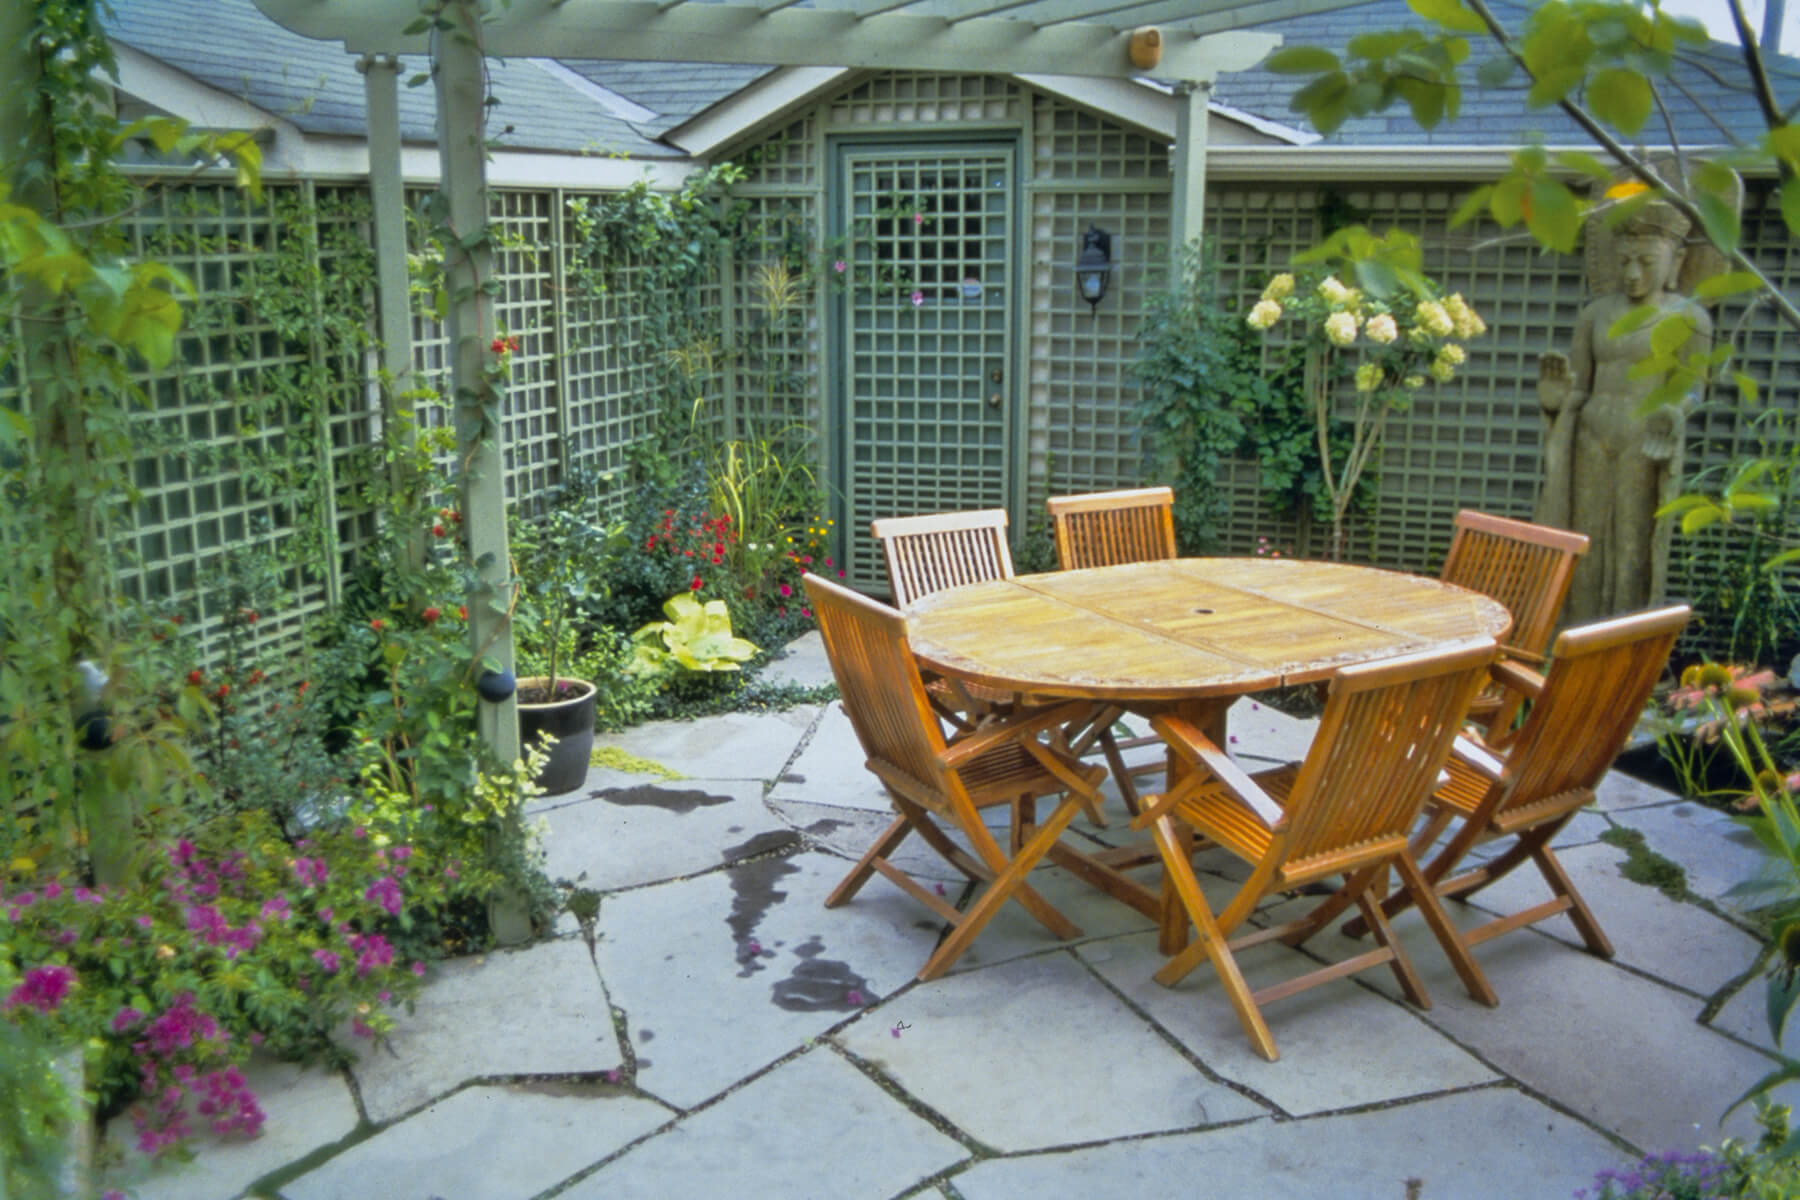 award winning backyard garden with table chairs and lattice